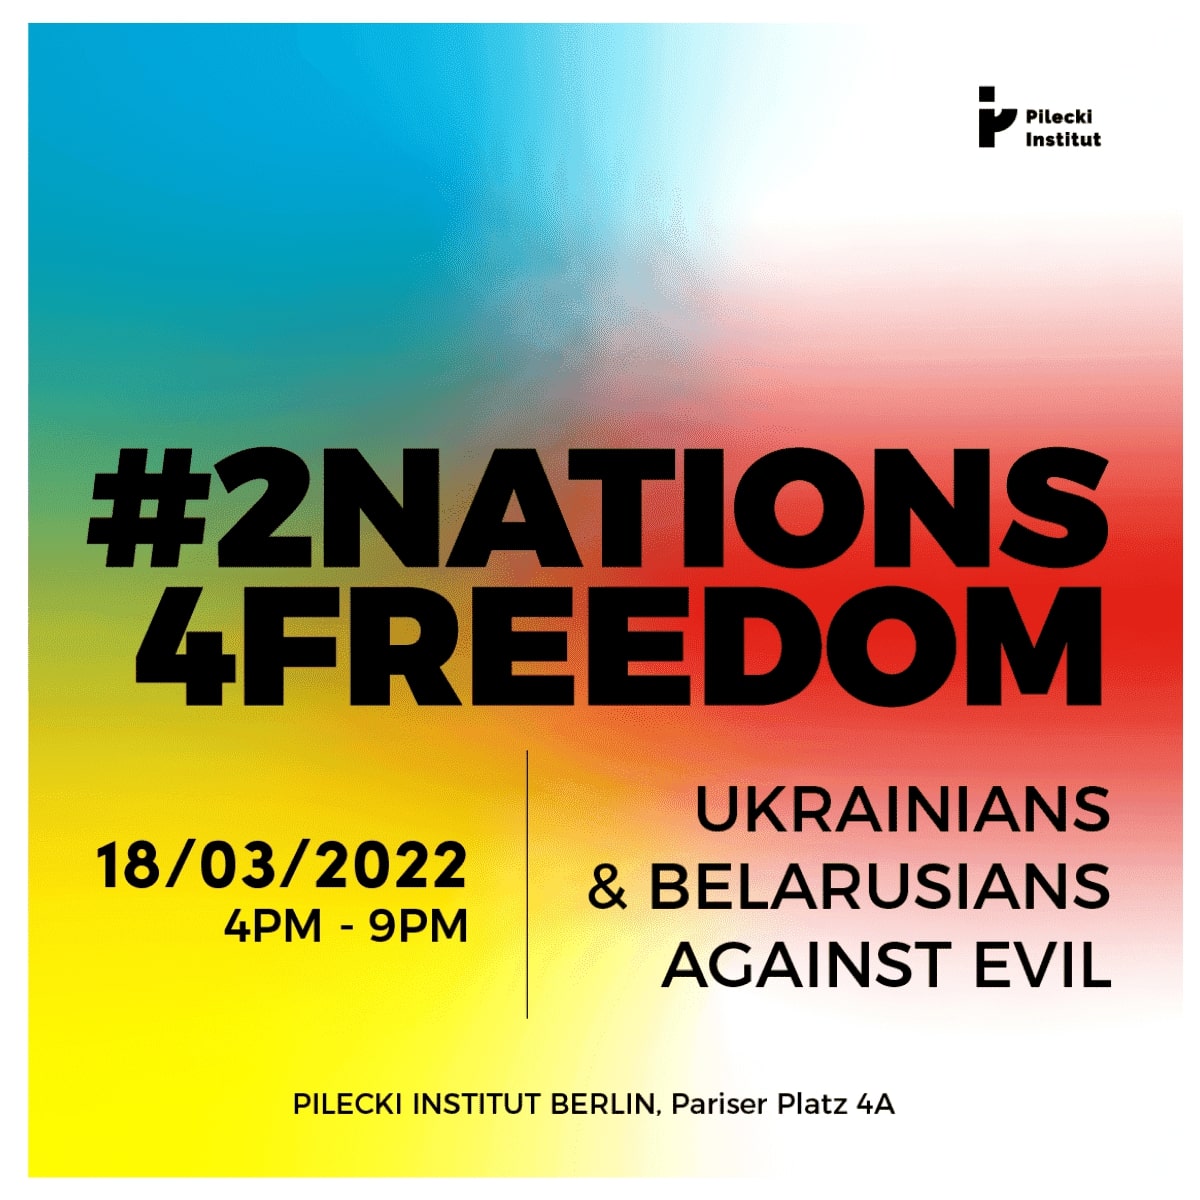 #2NATIONS4FREEDOM - UKRAINIANS & BELARUSIANS AGAINST EVIL